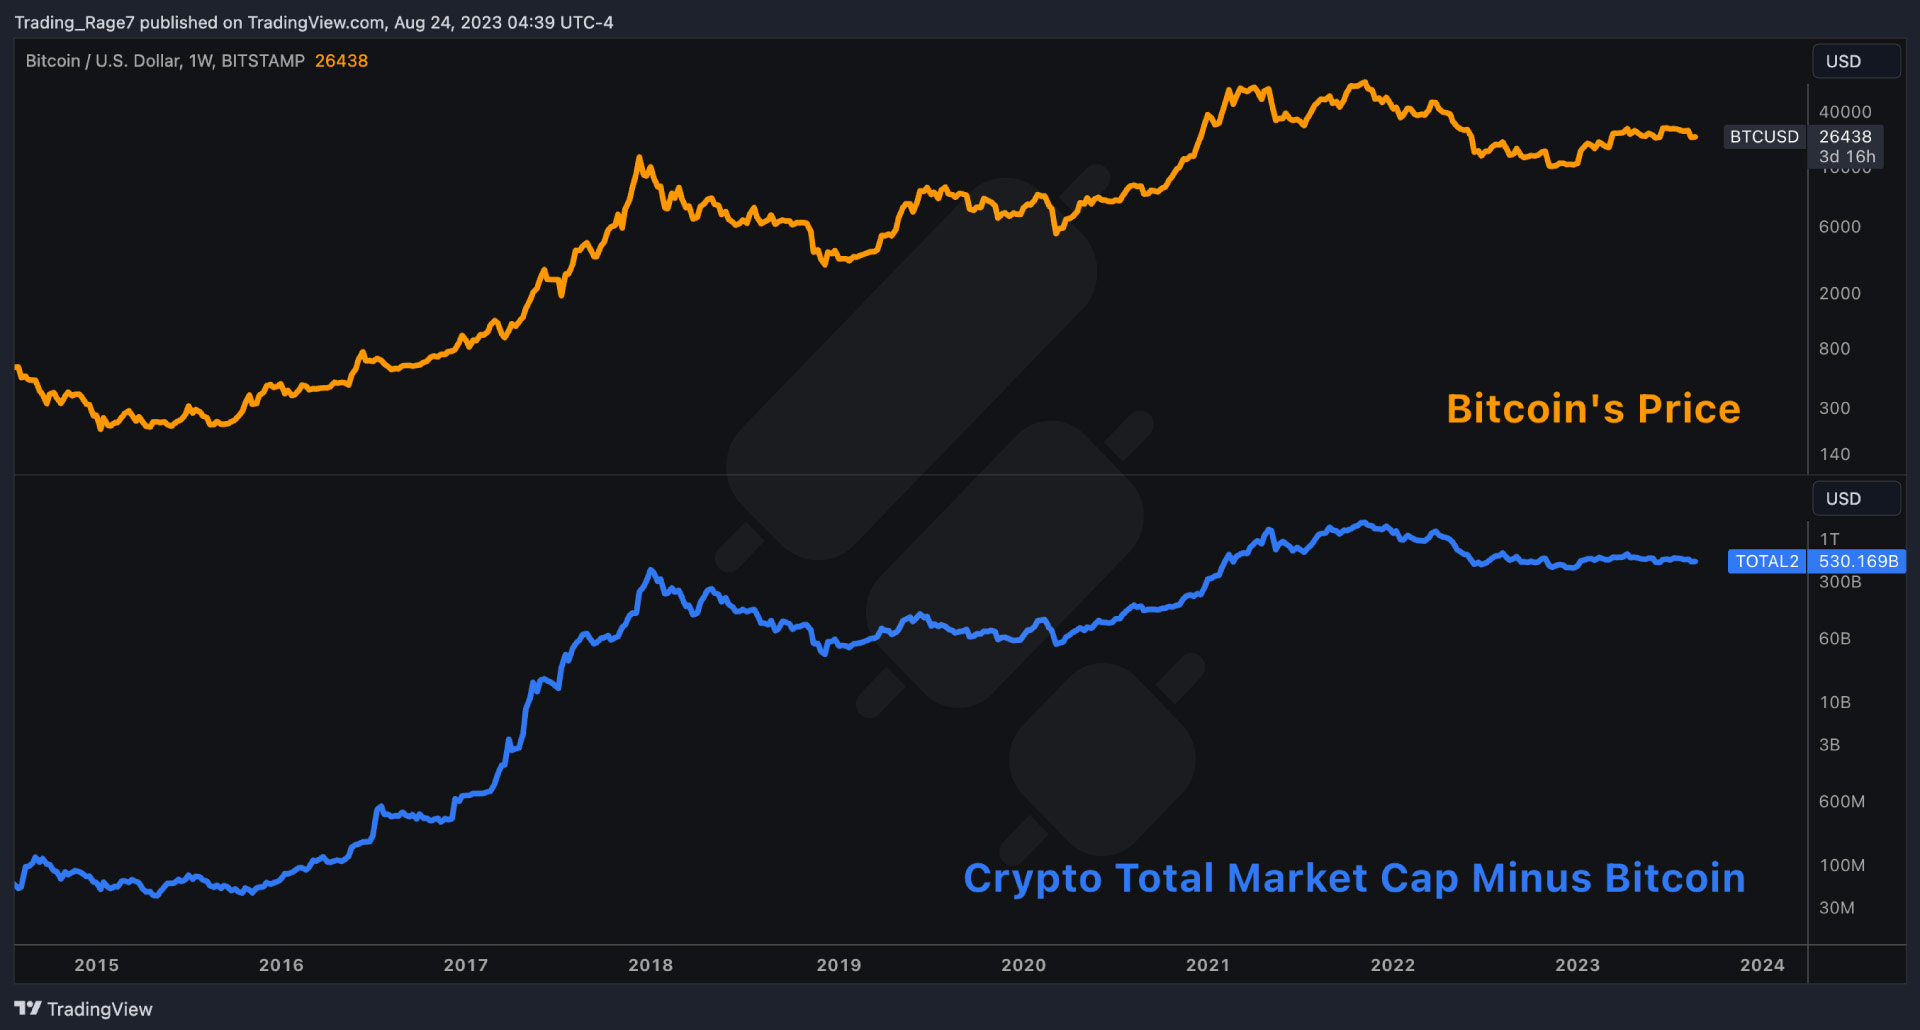 Crypto total market cap minus Bitcoin